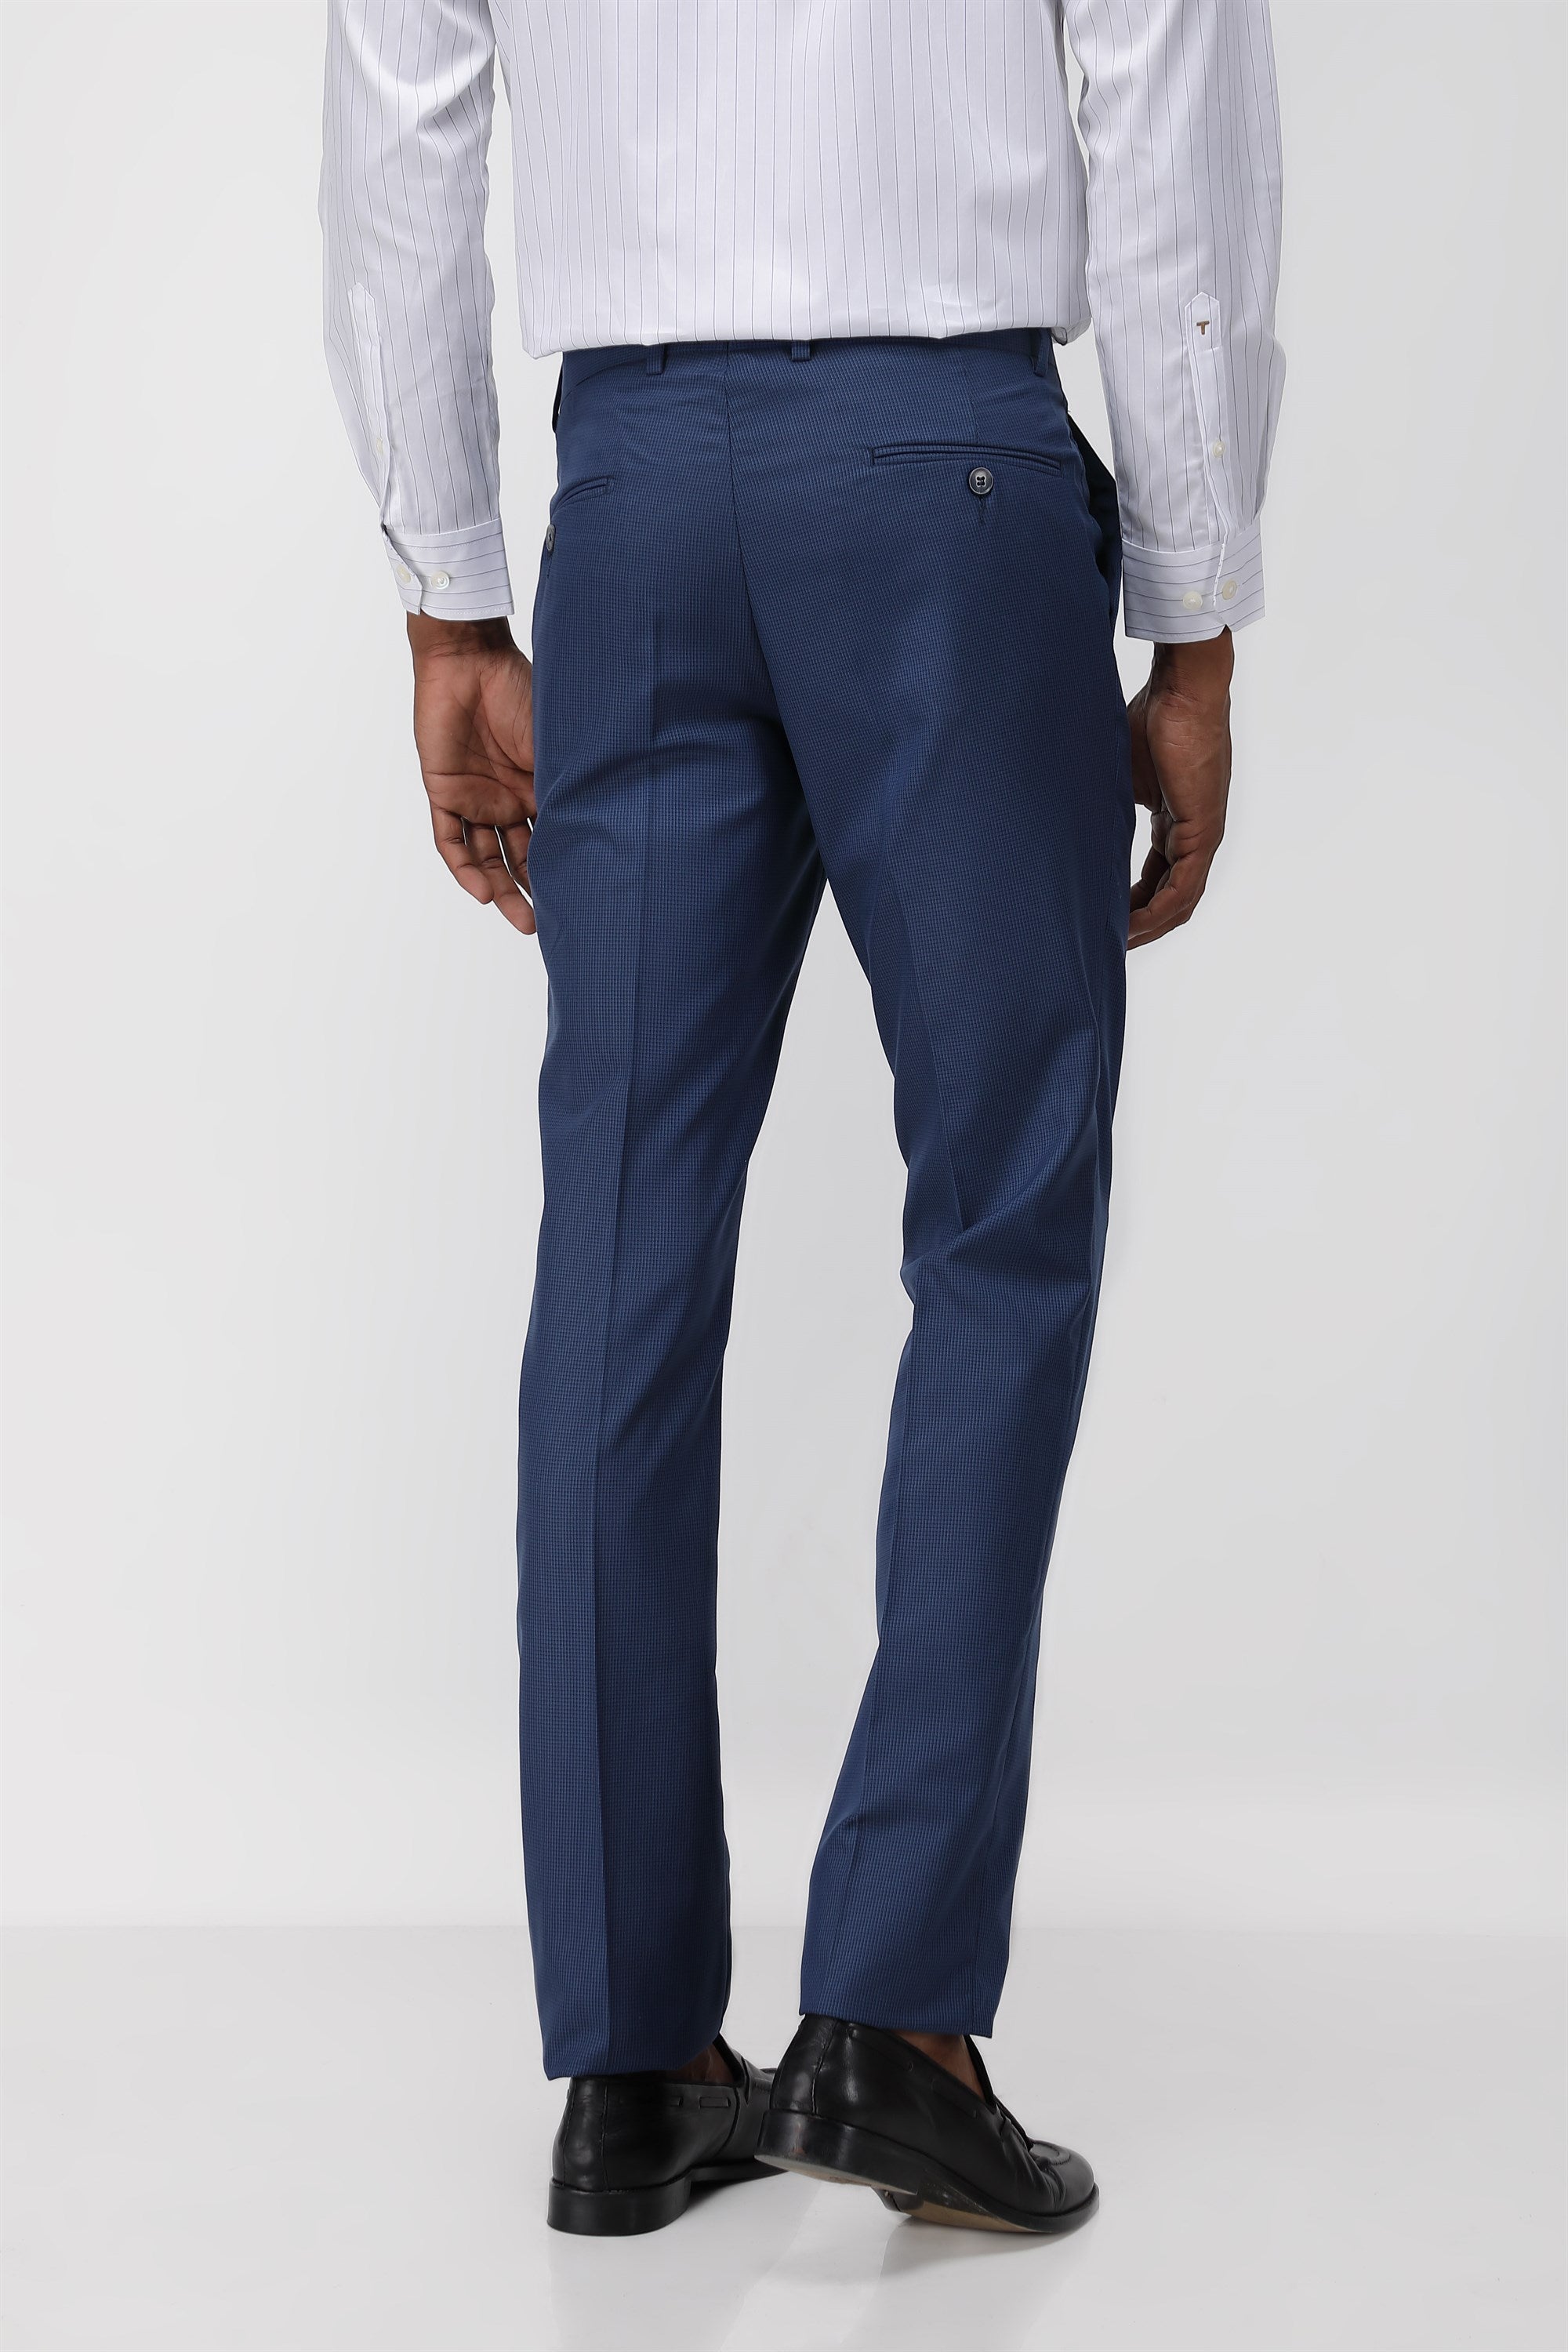 Amazon Brand - Symbol Men's Slim Dress Pants : Amazon.in: Fashion